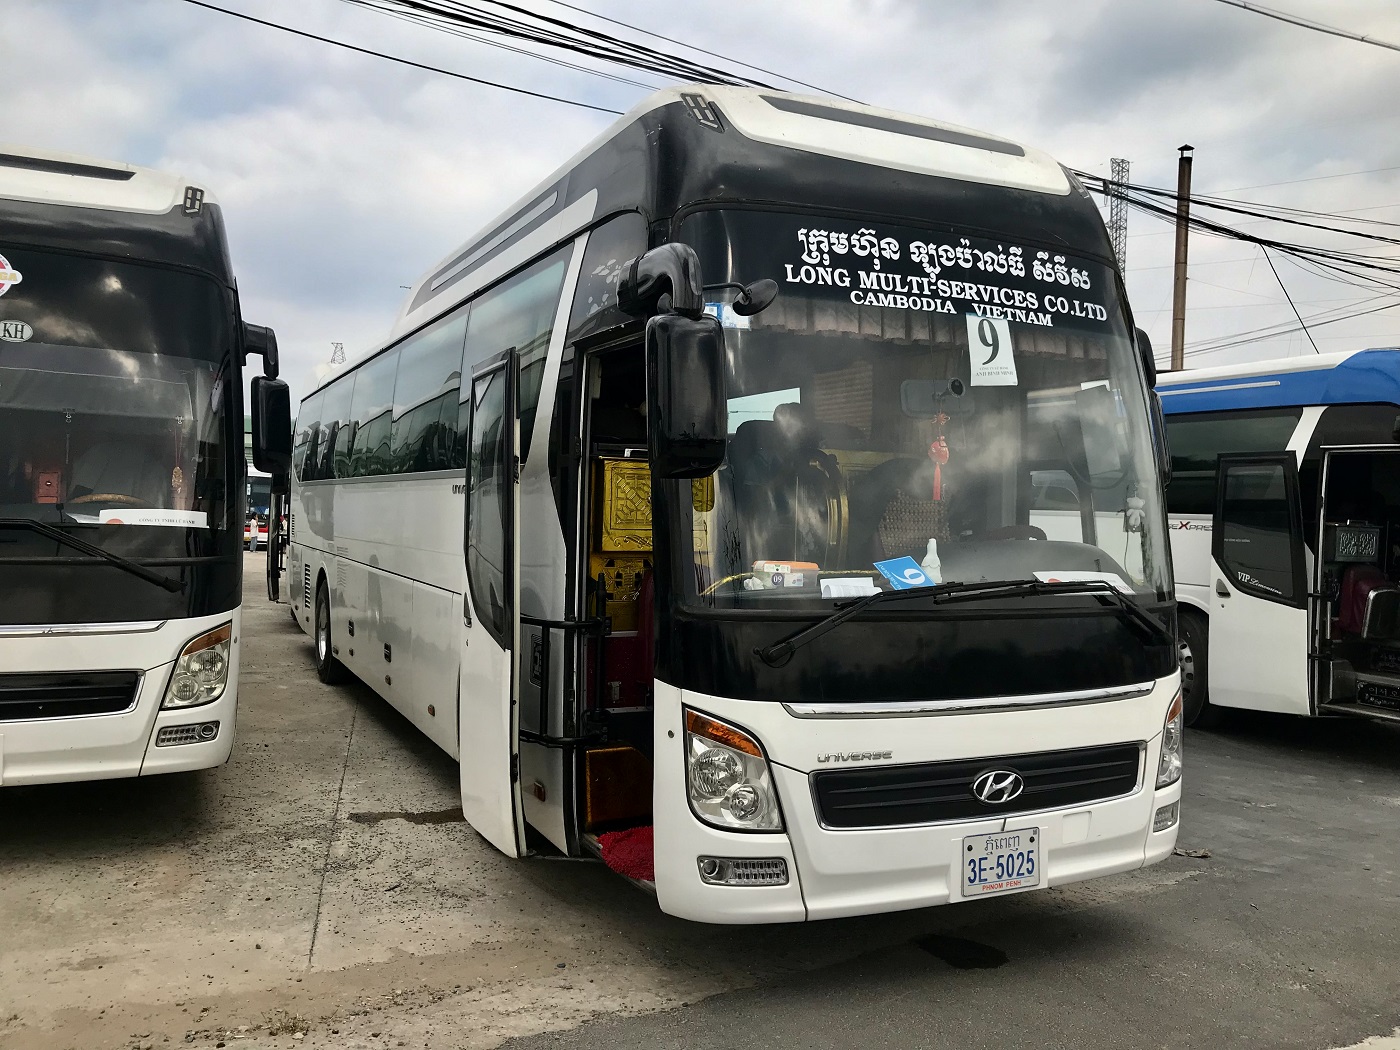 Phnom Penh, Hyundai Universe Express Noble # 3E-5025